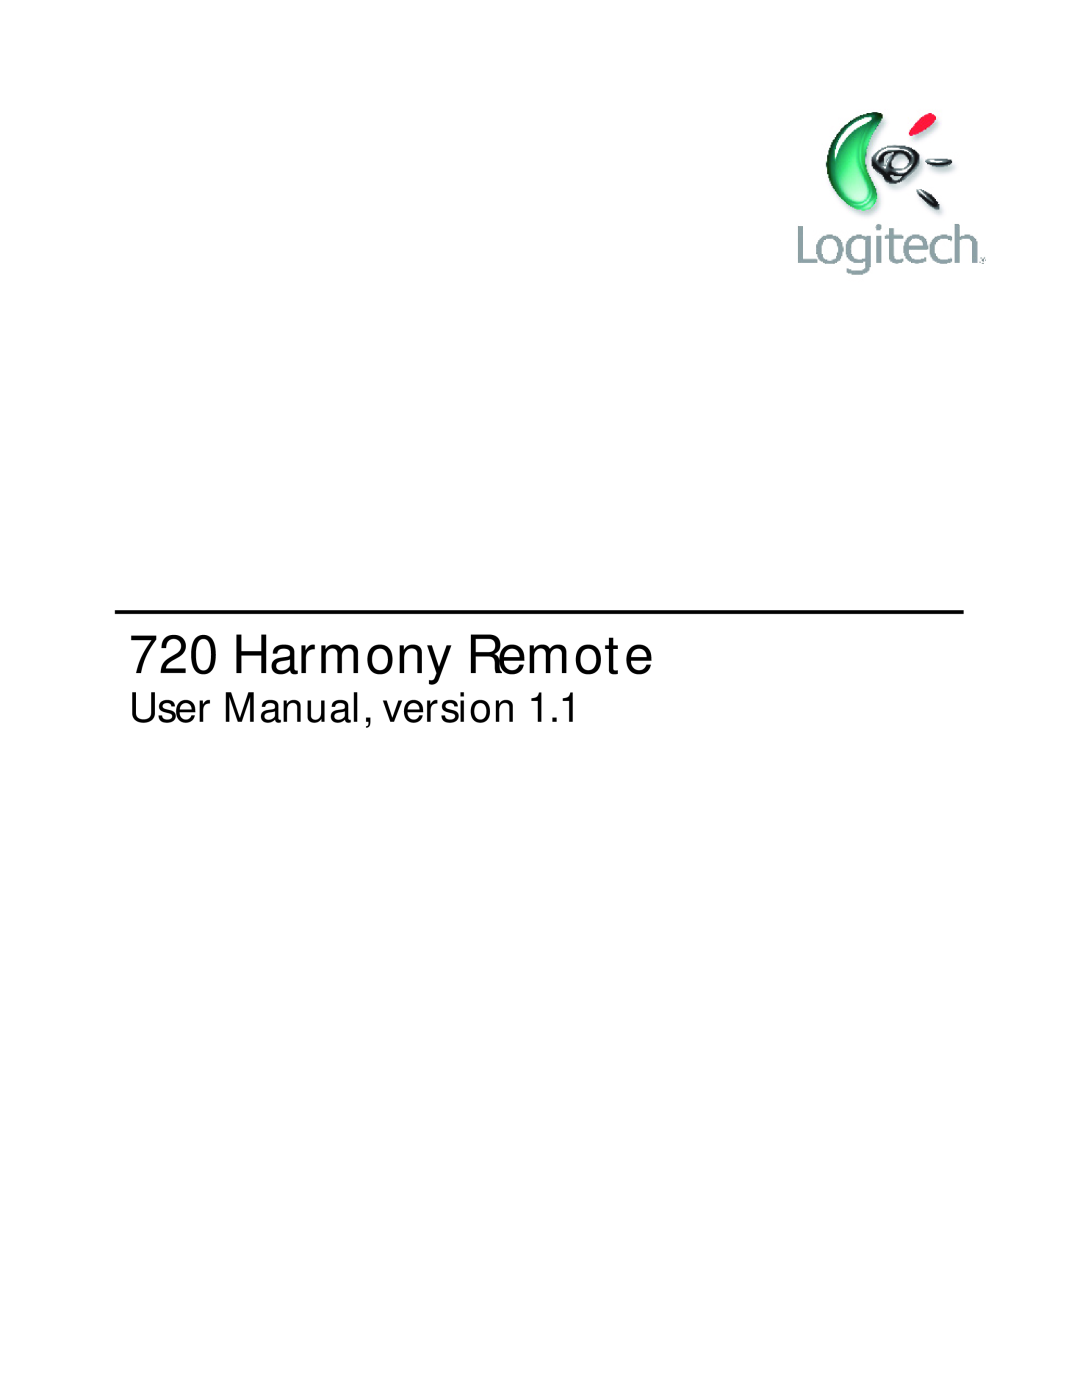 Logitech 720 user manual Harmony Remote, User Manual, version 